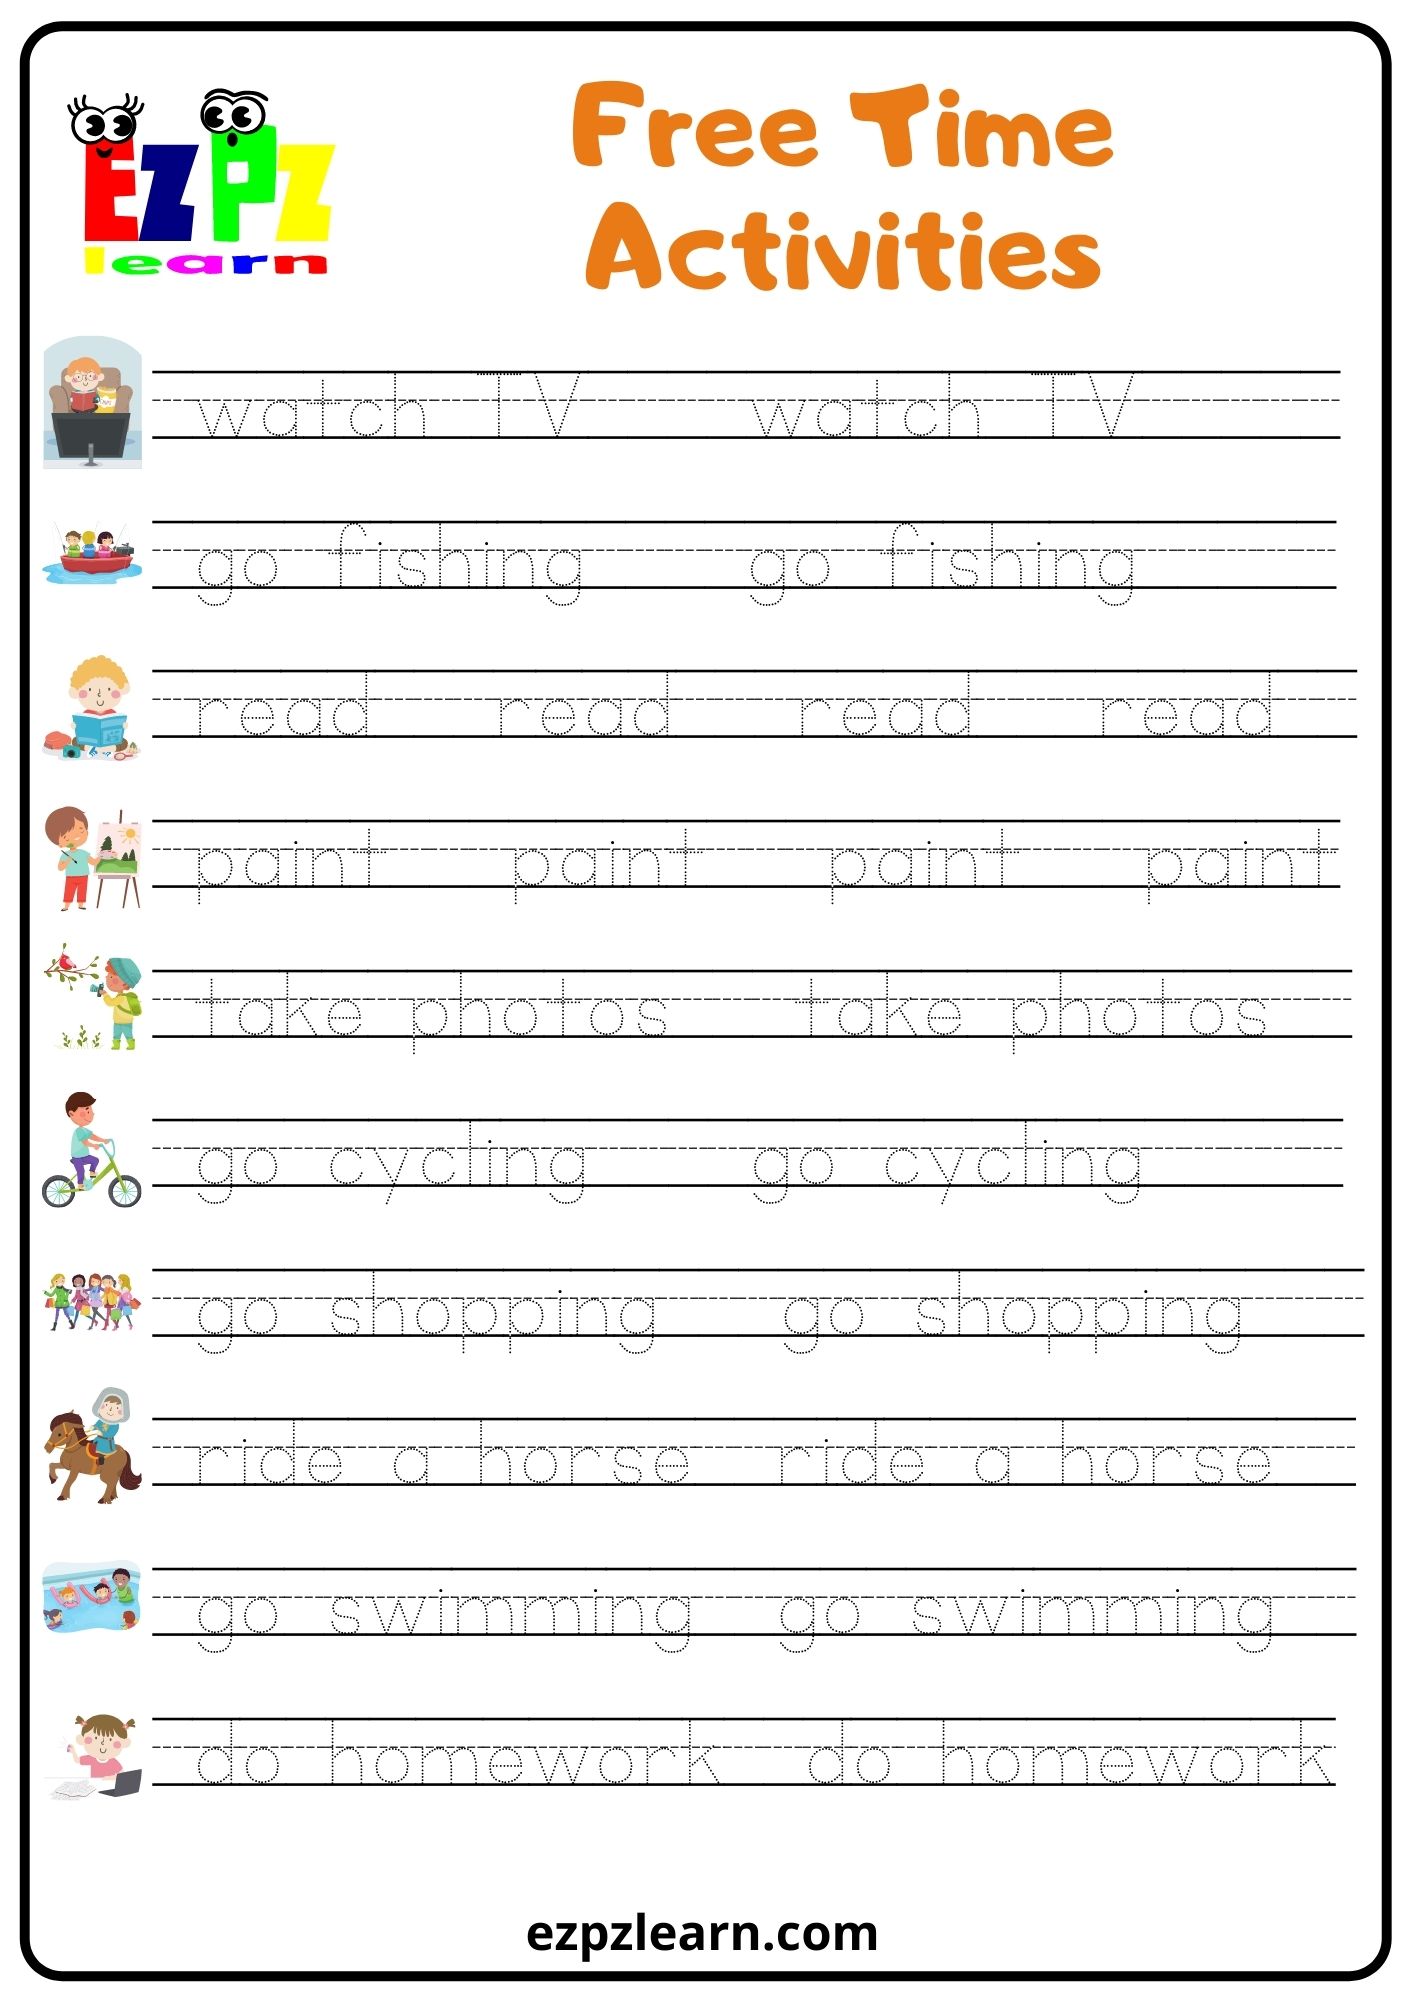 free-time-activities-word-tracing-worksheet-ezpzlearn